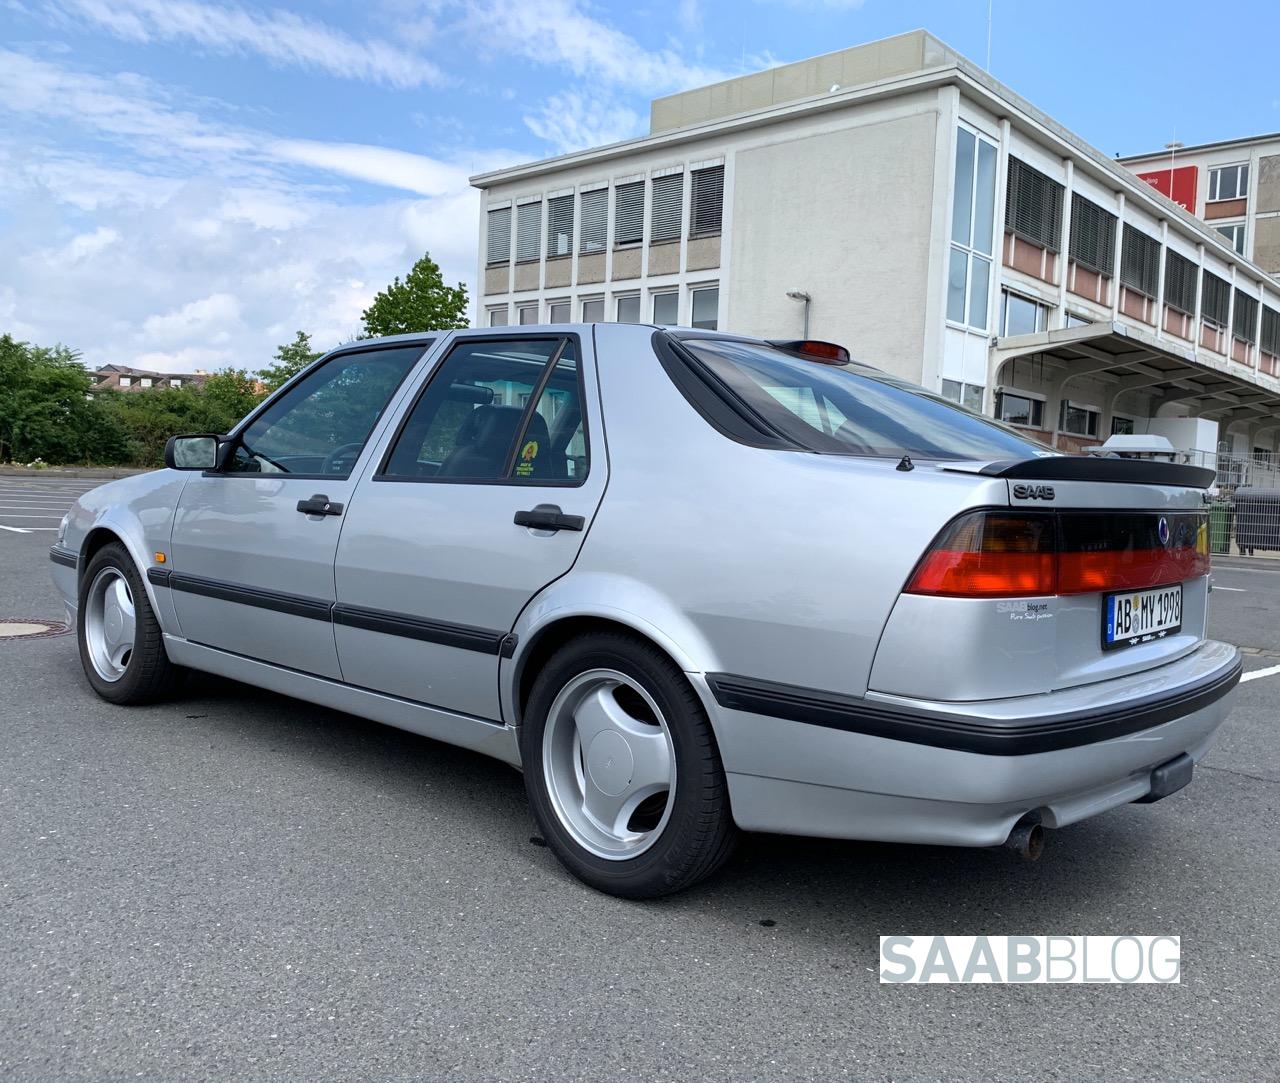 The Saab 9000 - matured into a classic - SaabBlog